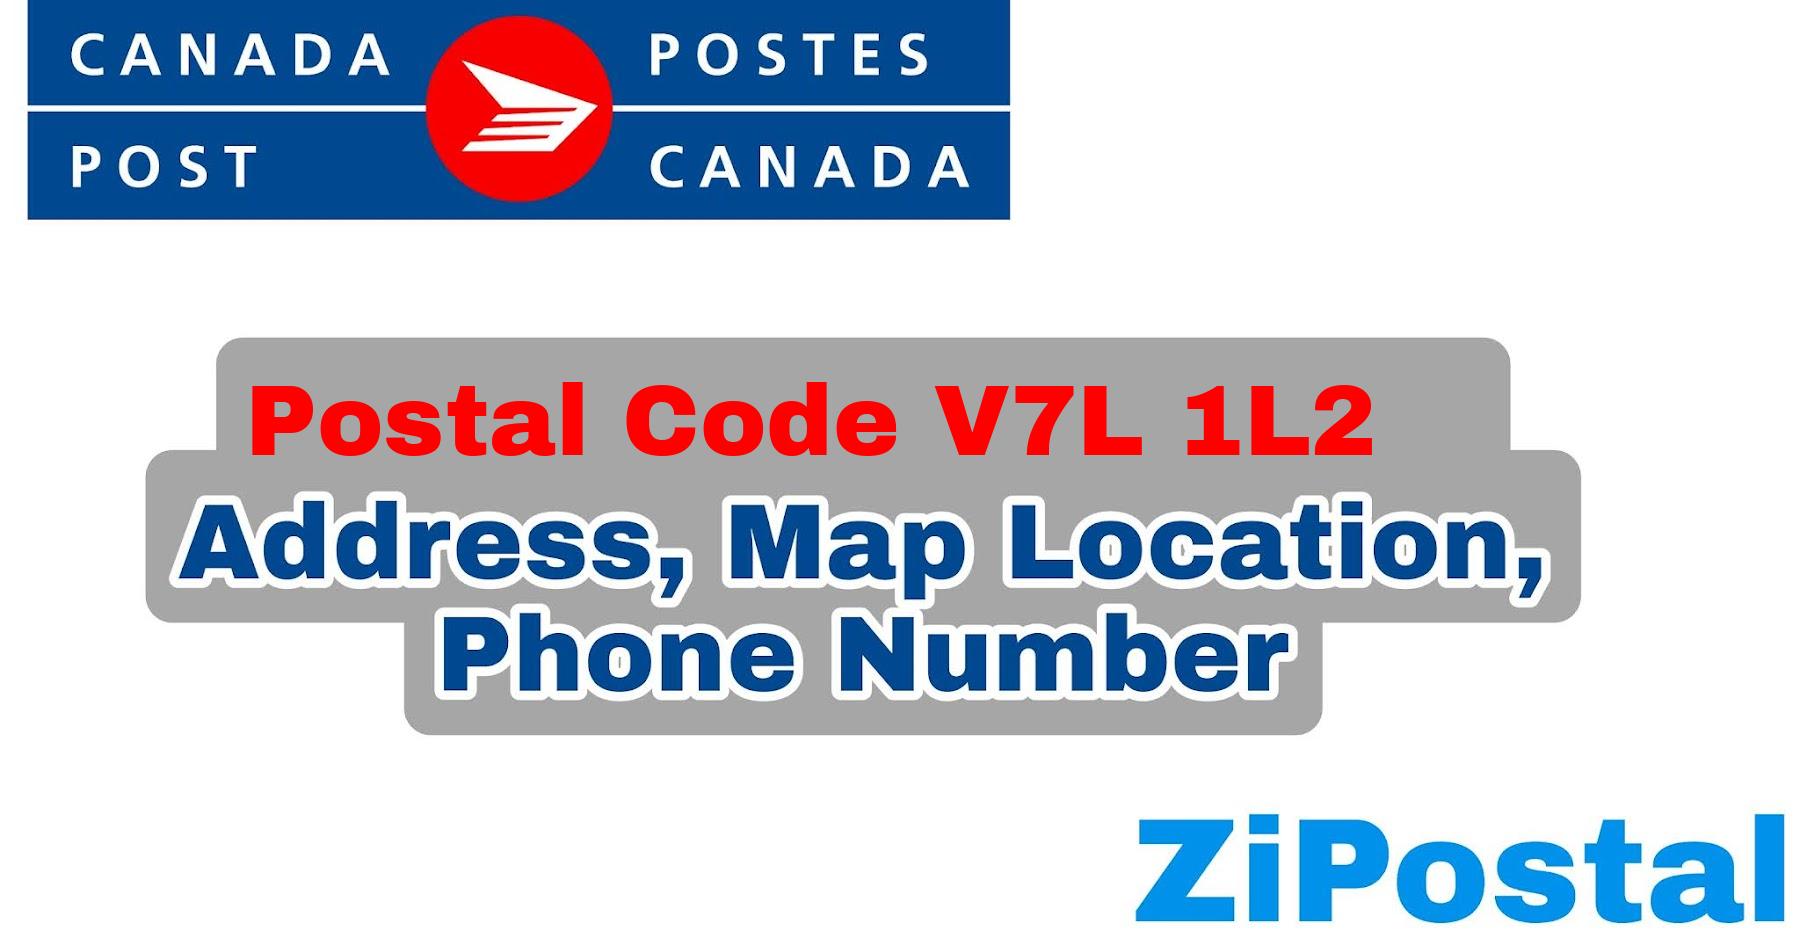 Postal Code V7L 1L2 Address Map Location and Phone Number